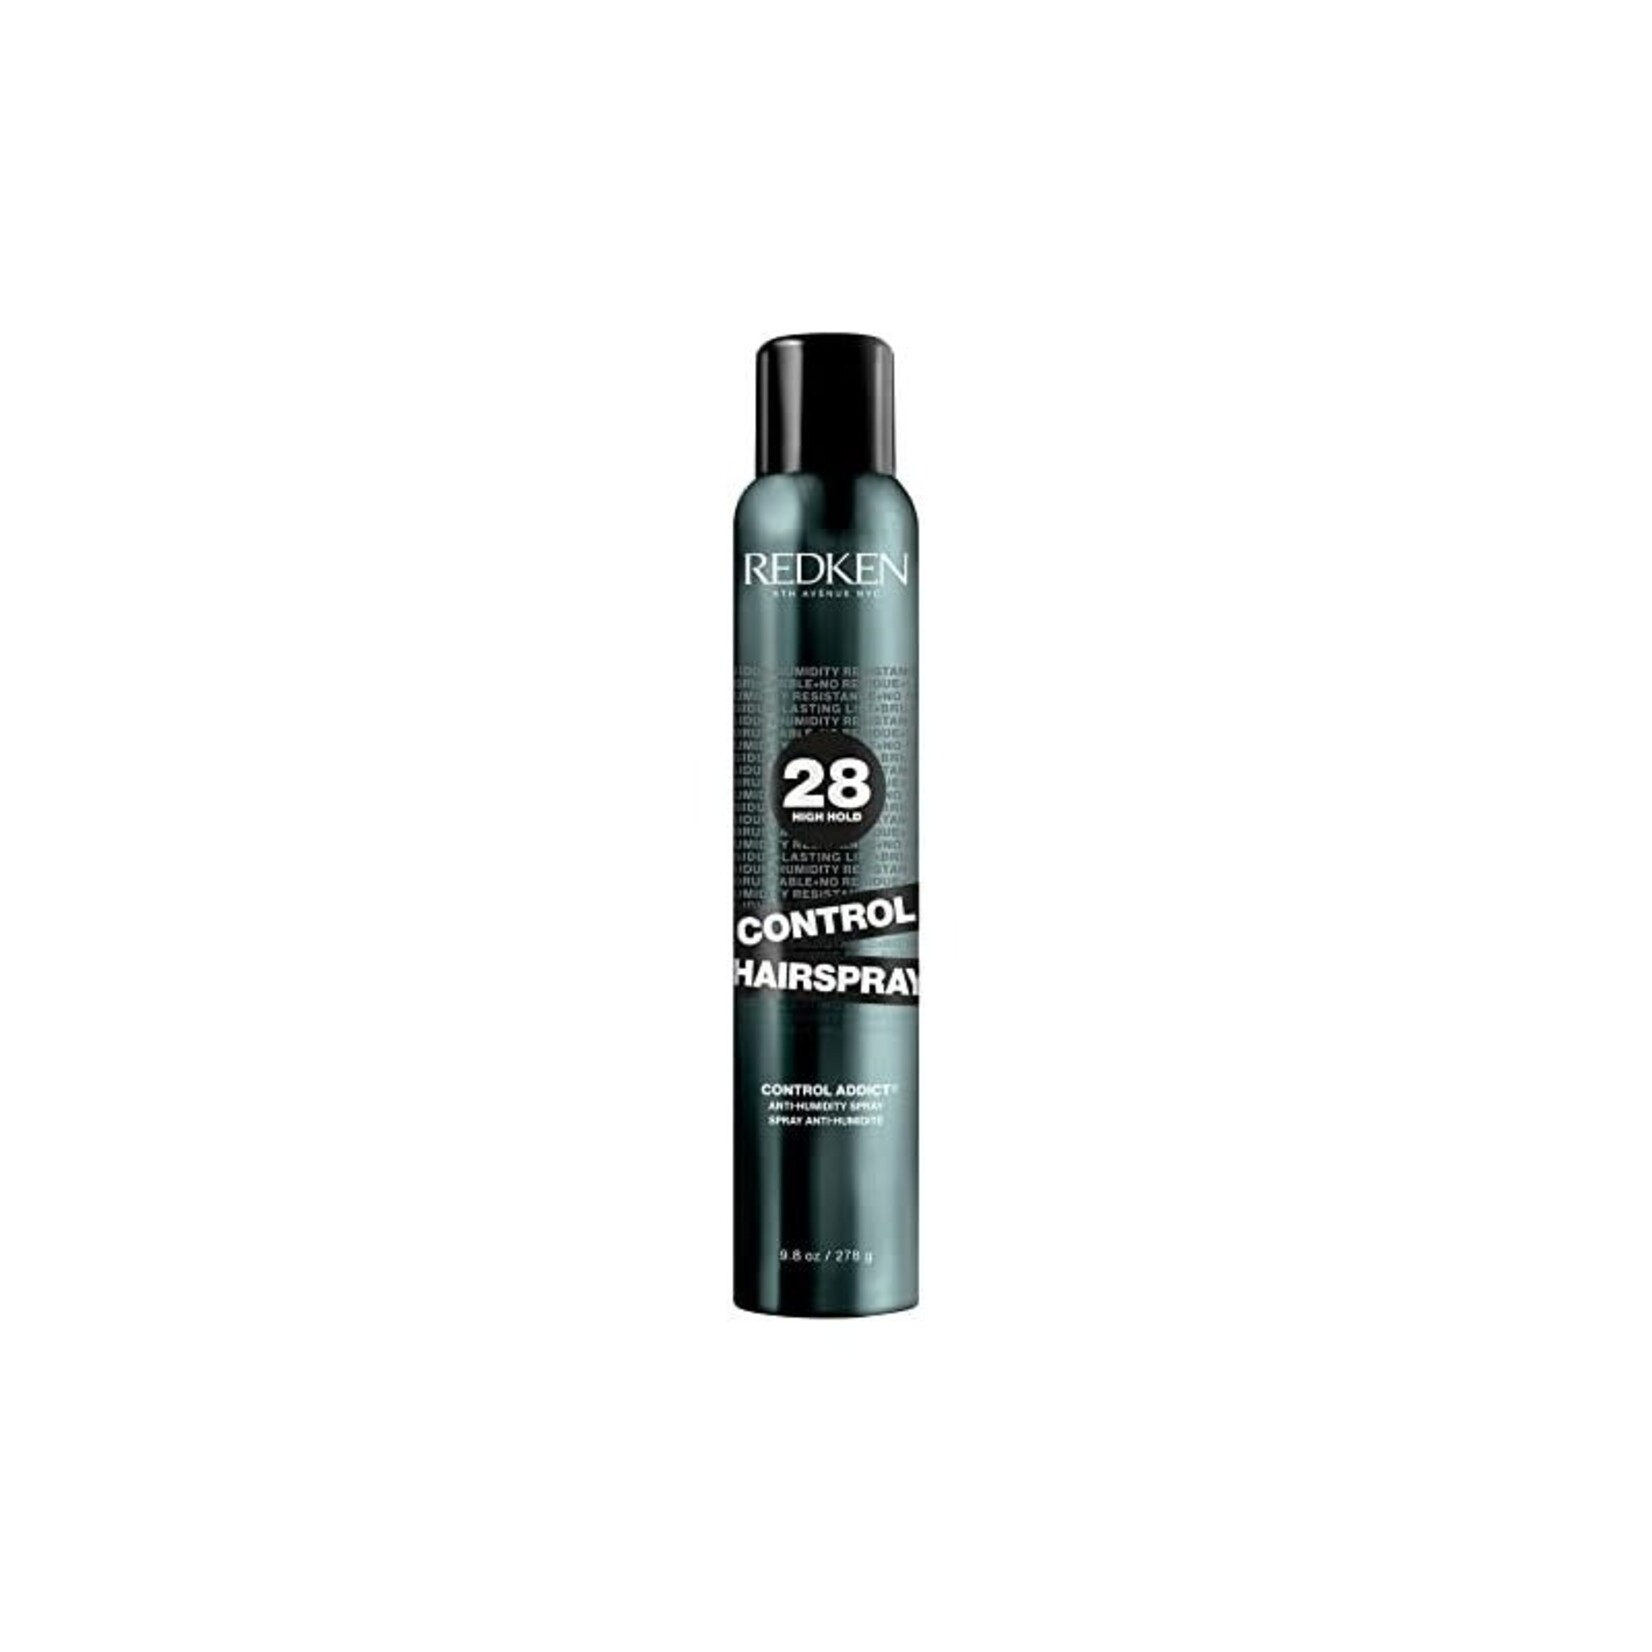 Redken Redken - High Control Hairspray - 28 Control Addict 278g